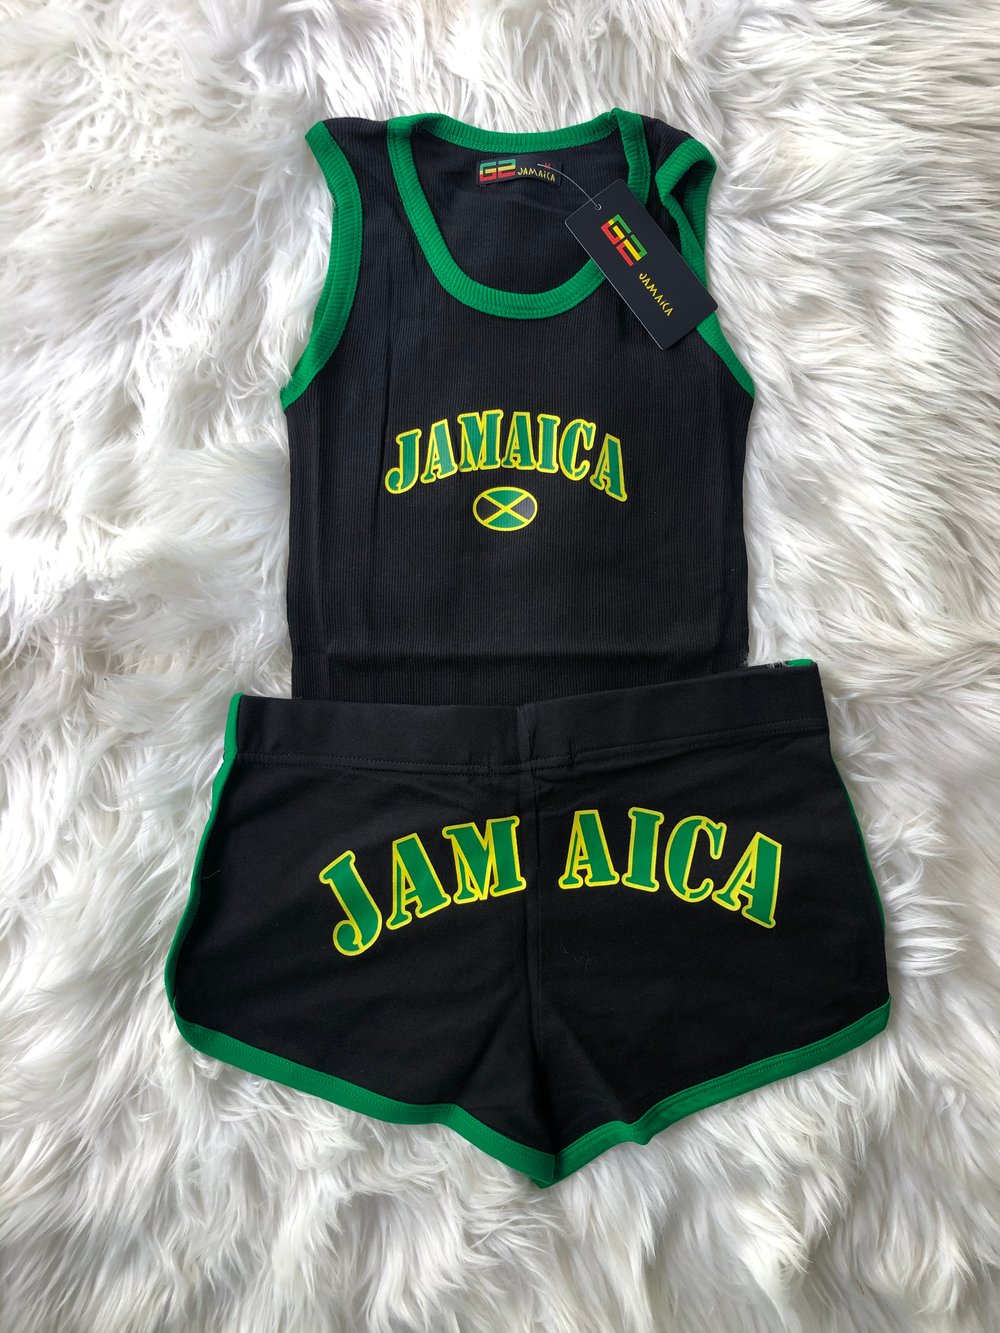 Jamaican ladies shorts set (Black)